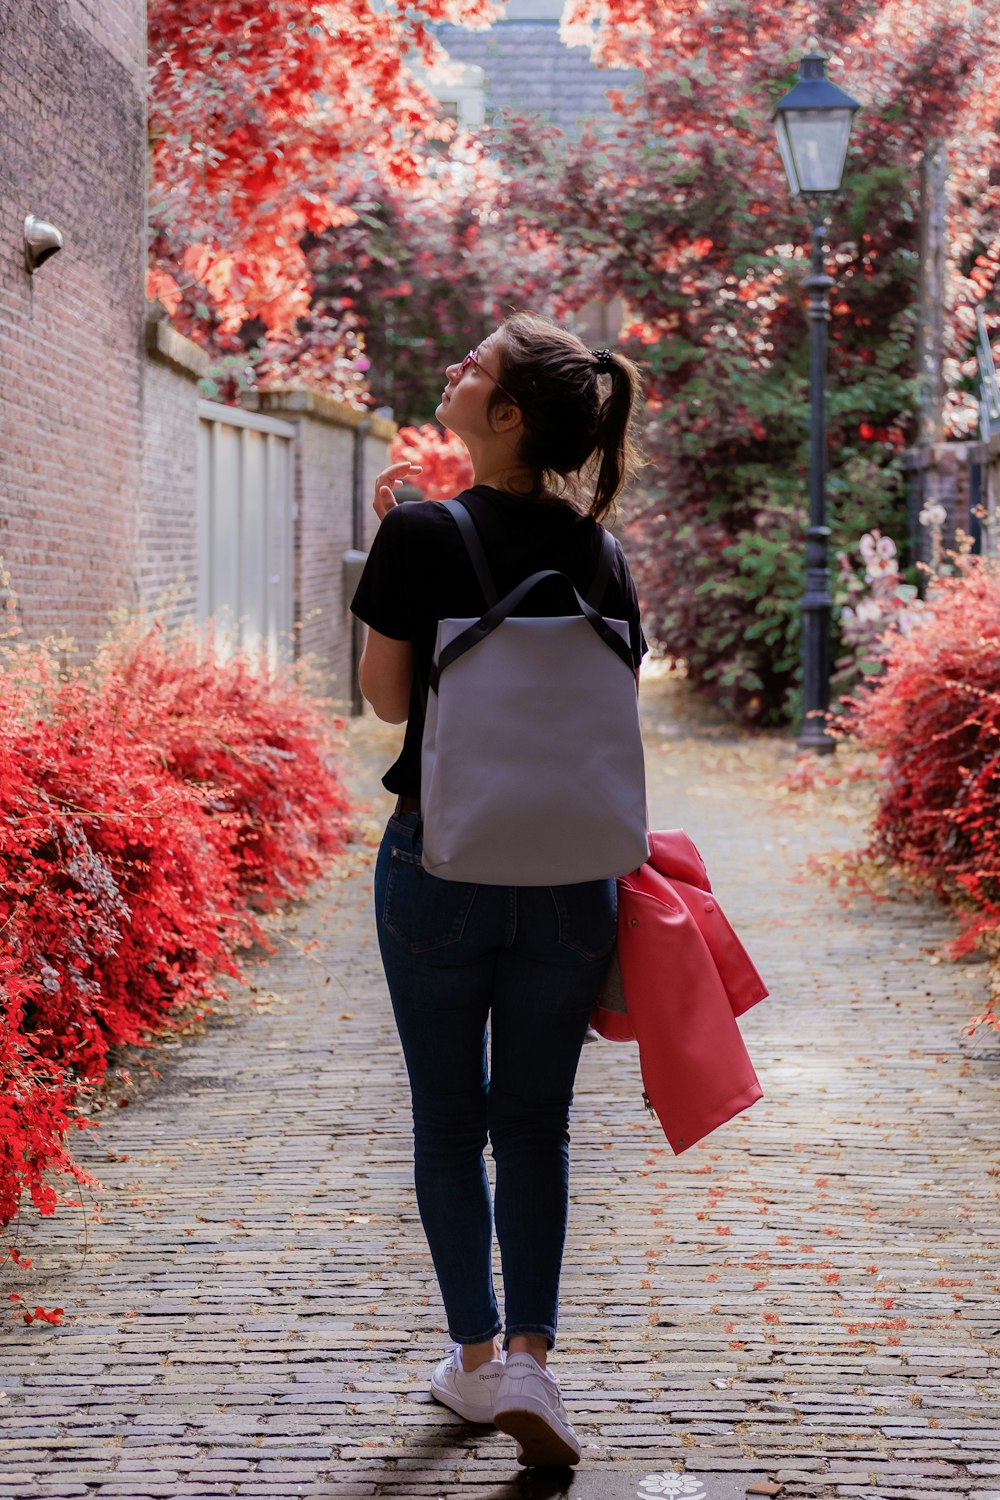 woman wearing black shirt and leggings carrying backpack